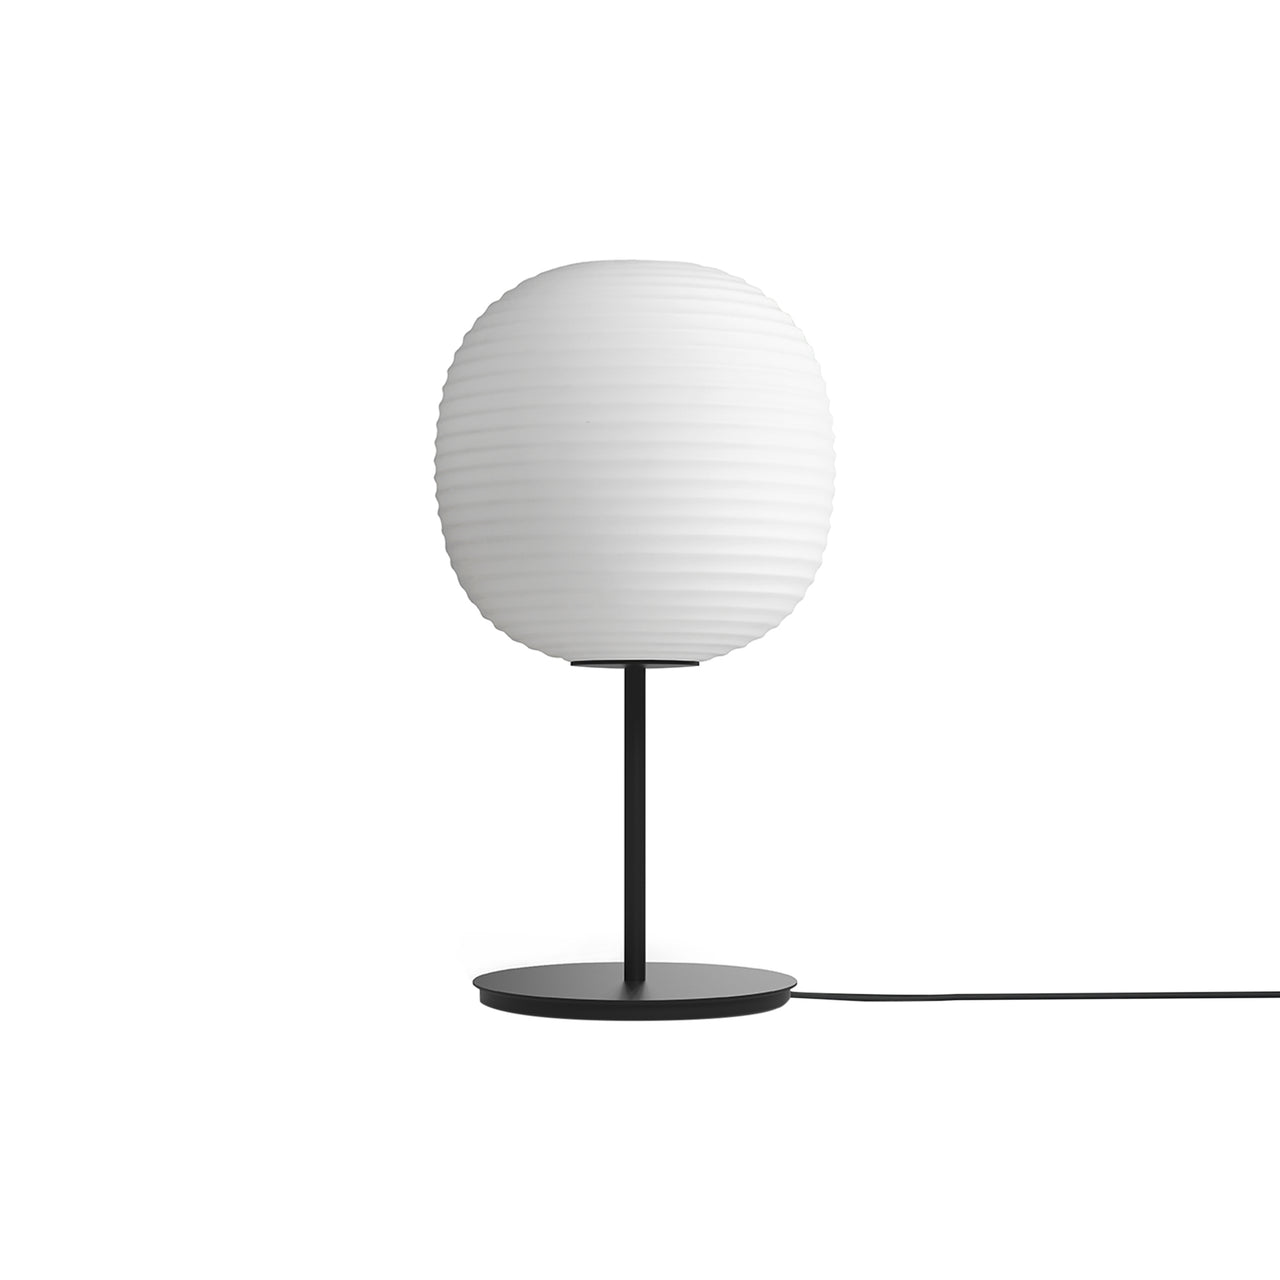 Lantern Table Lamp: Medium - 11.8